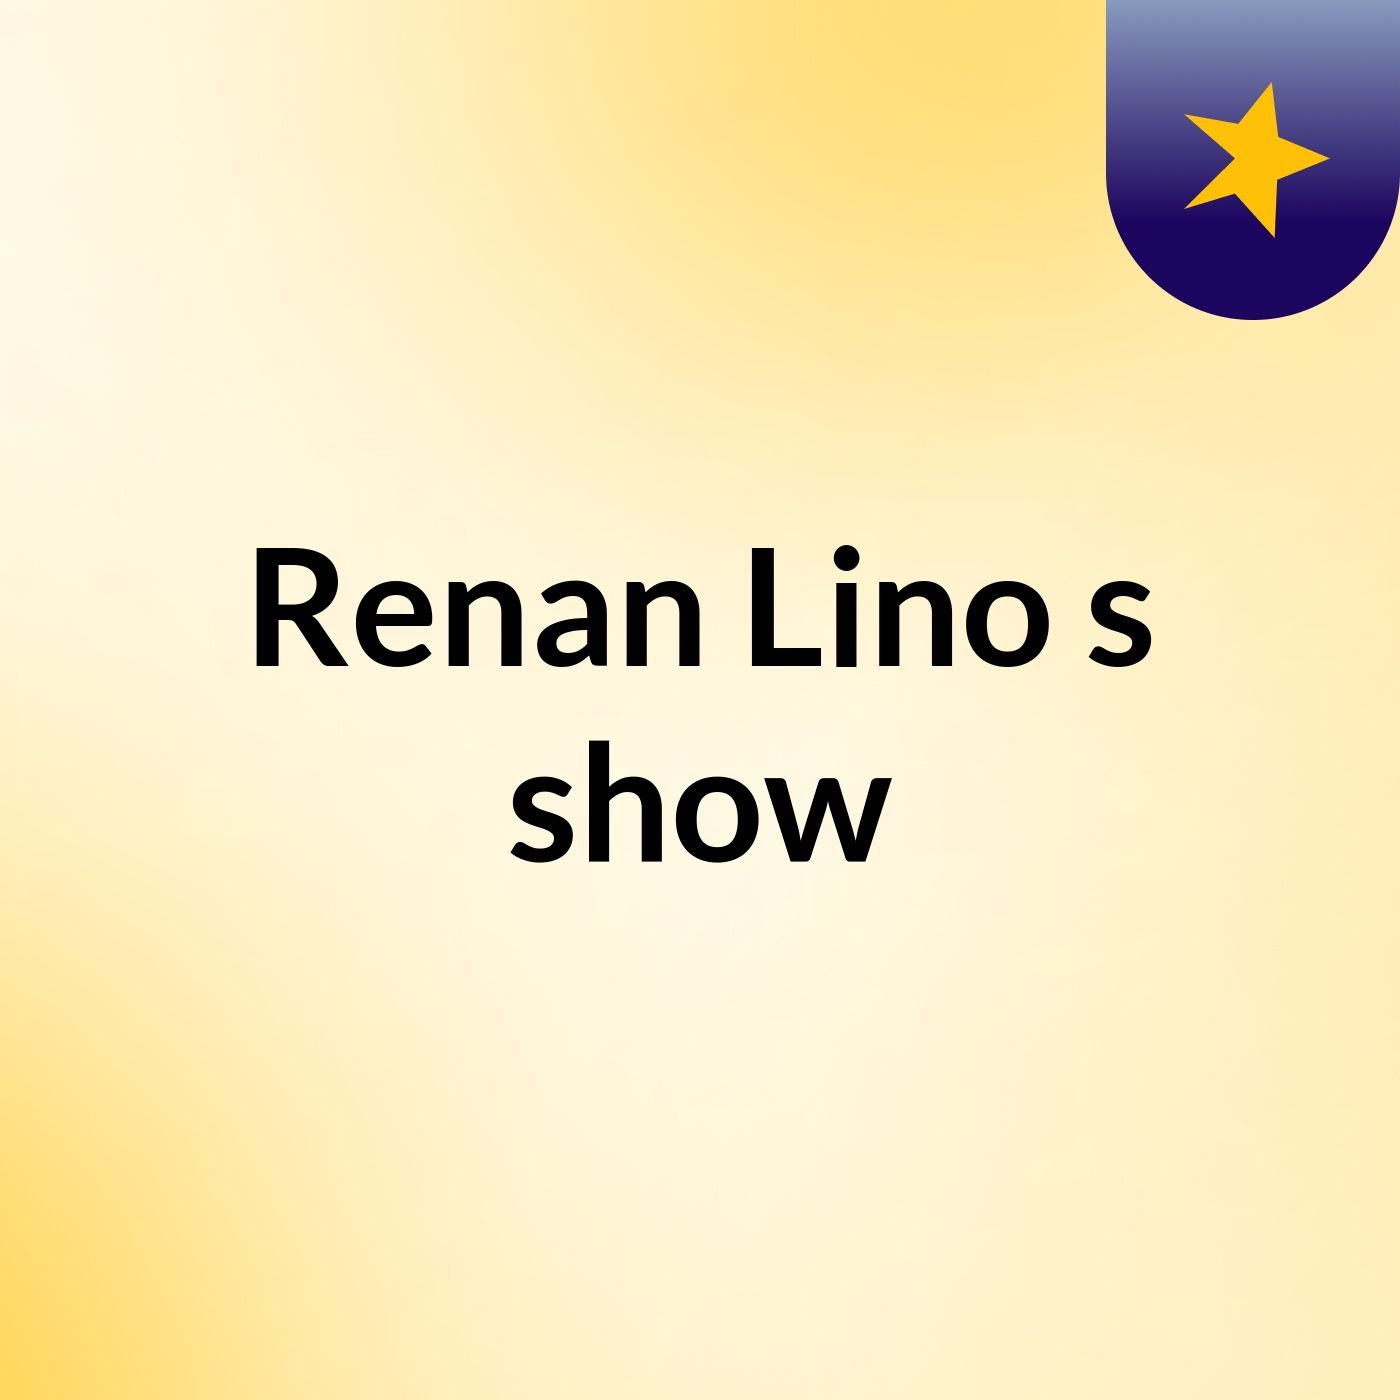 Renan Lino's show